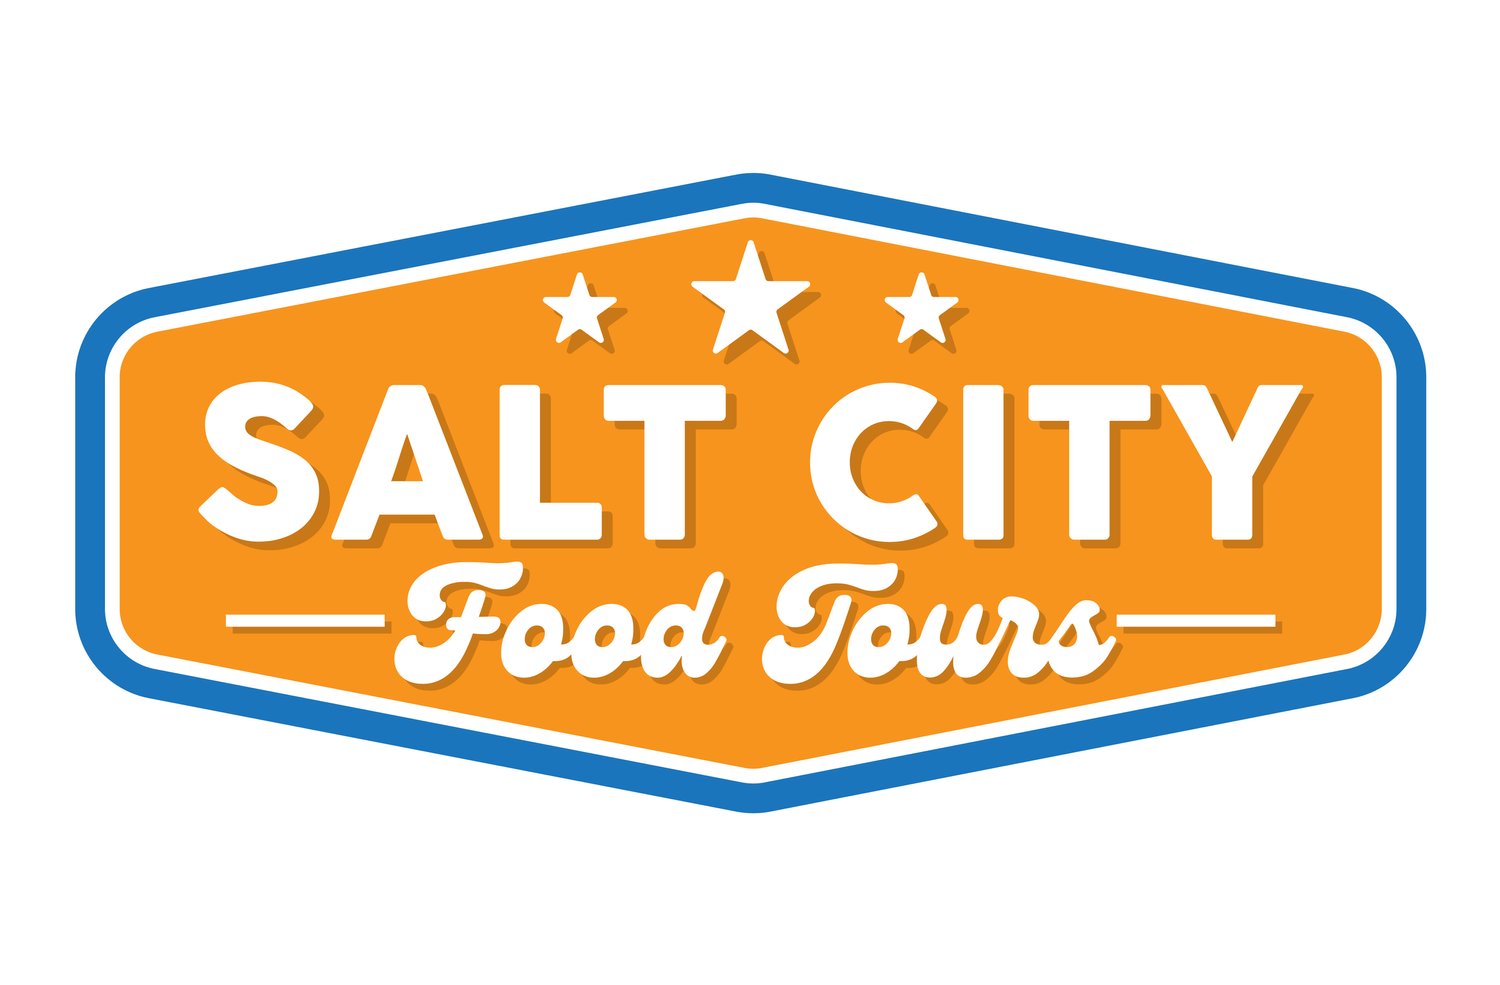 Salt City Food Tours